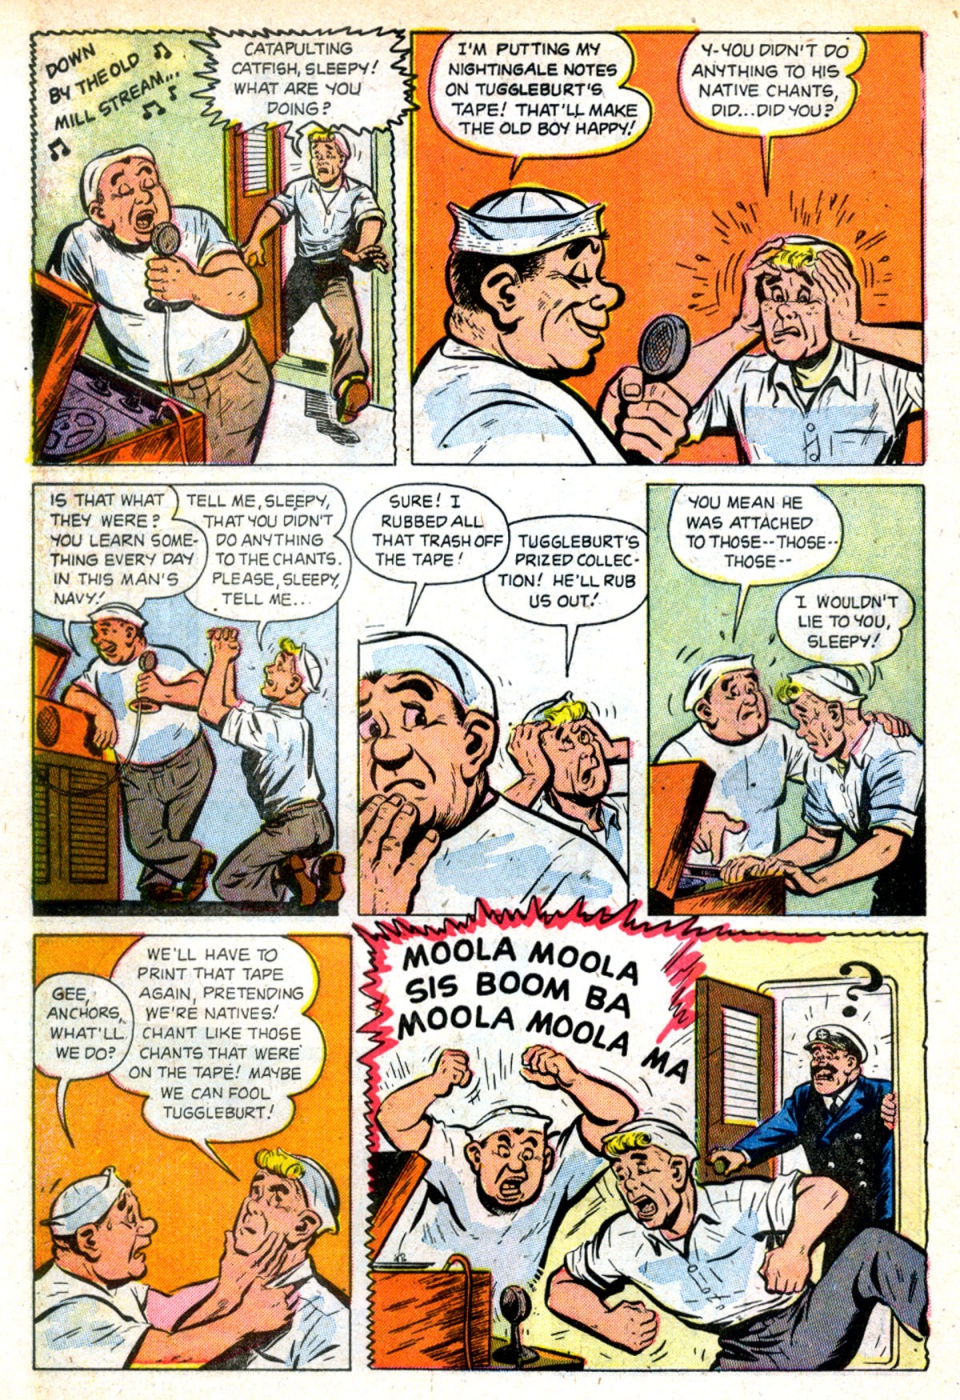 Anchors the Salt Water Daffy - Comics (b) (30)